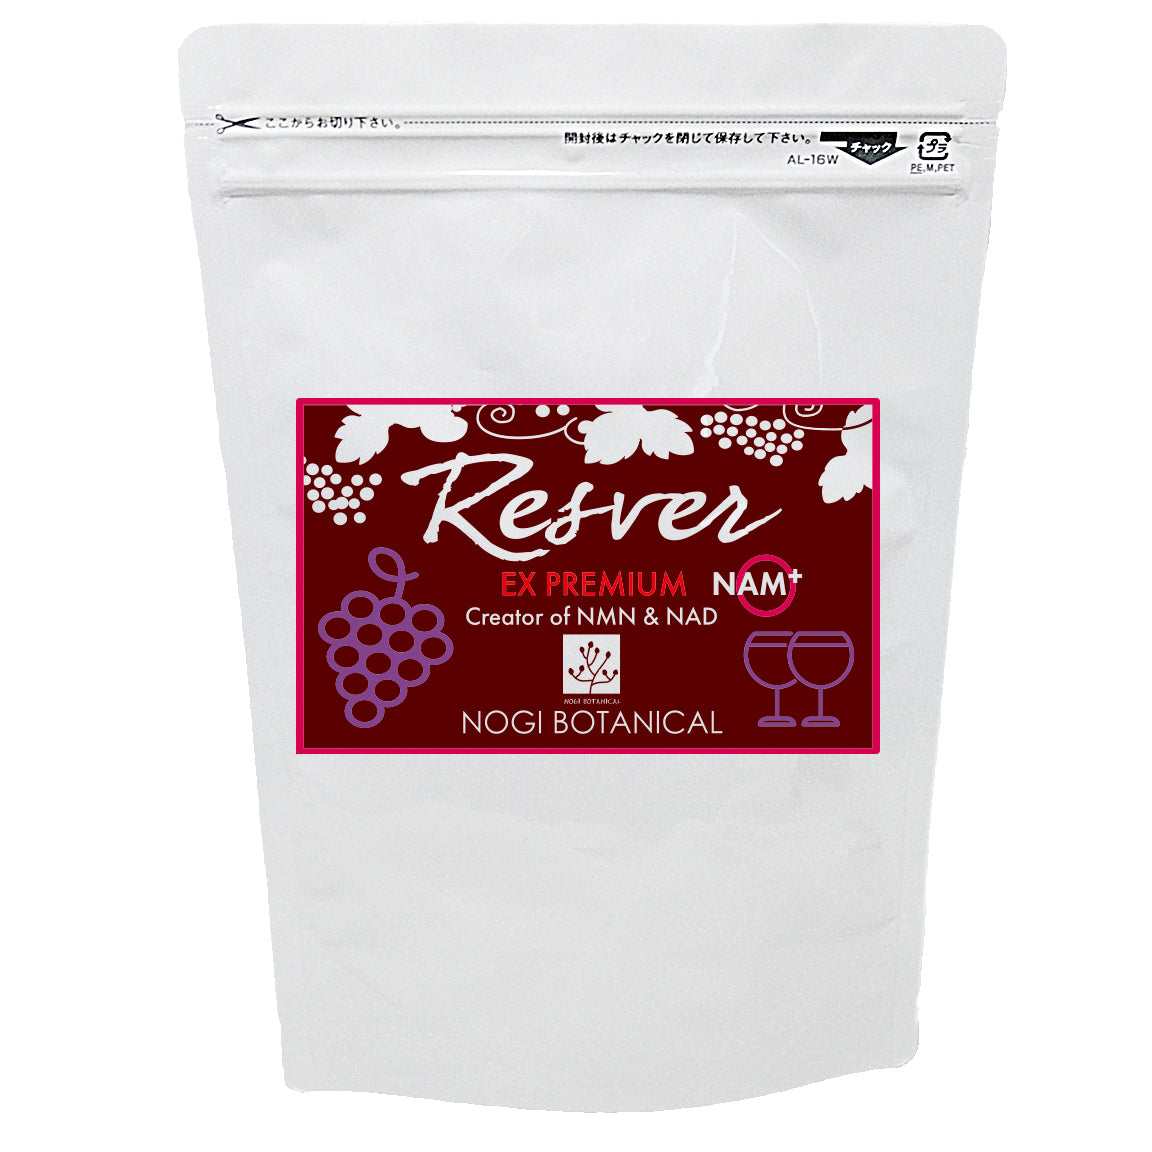 Premium Resve NAM France 100% Red Grape Derived High Purity Resveratrol (L) 151.7g (562mg x 270 tablets) Refill 